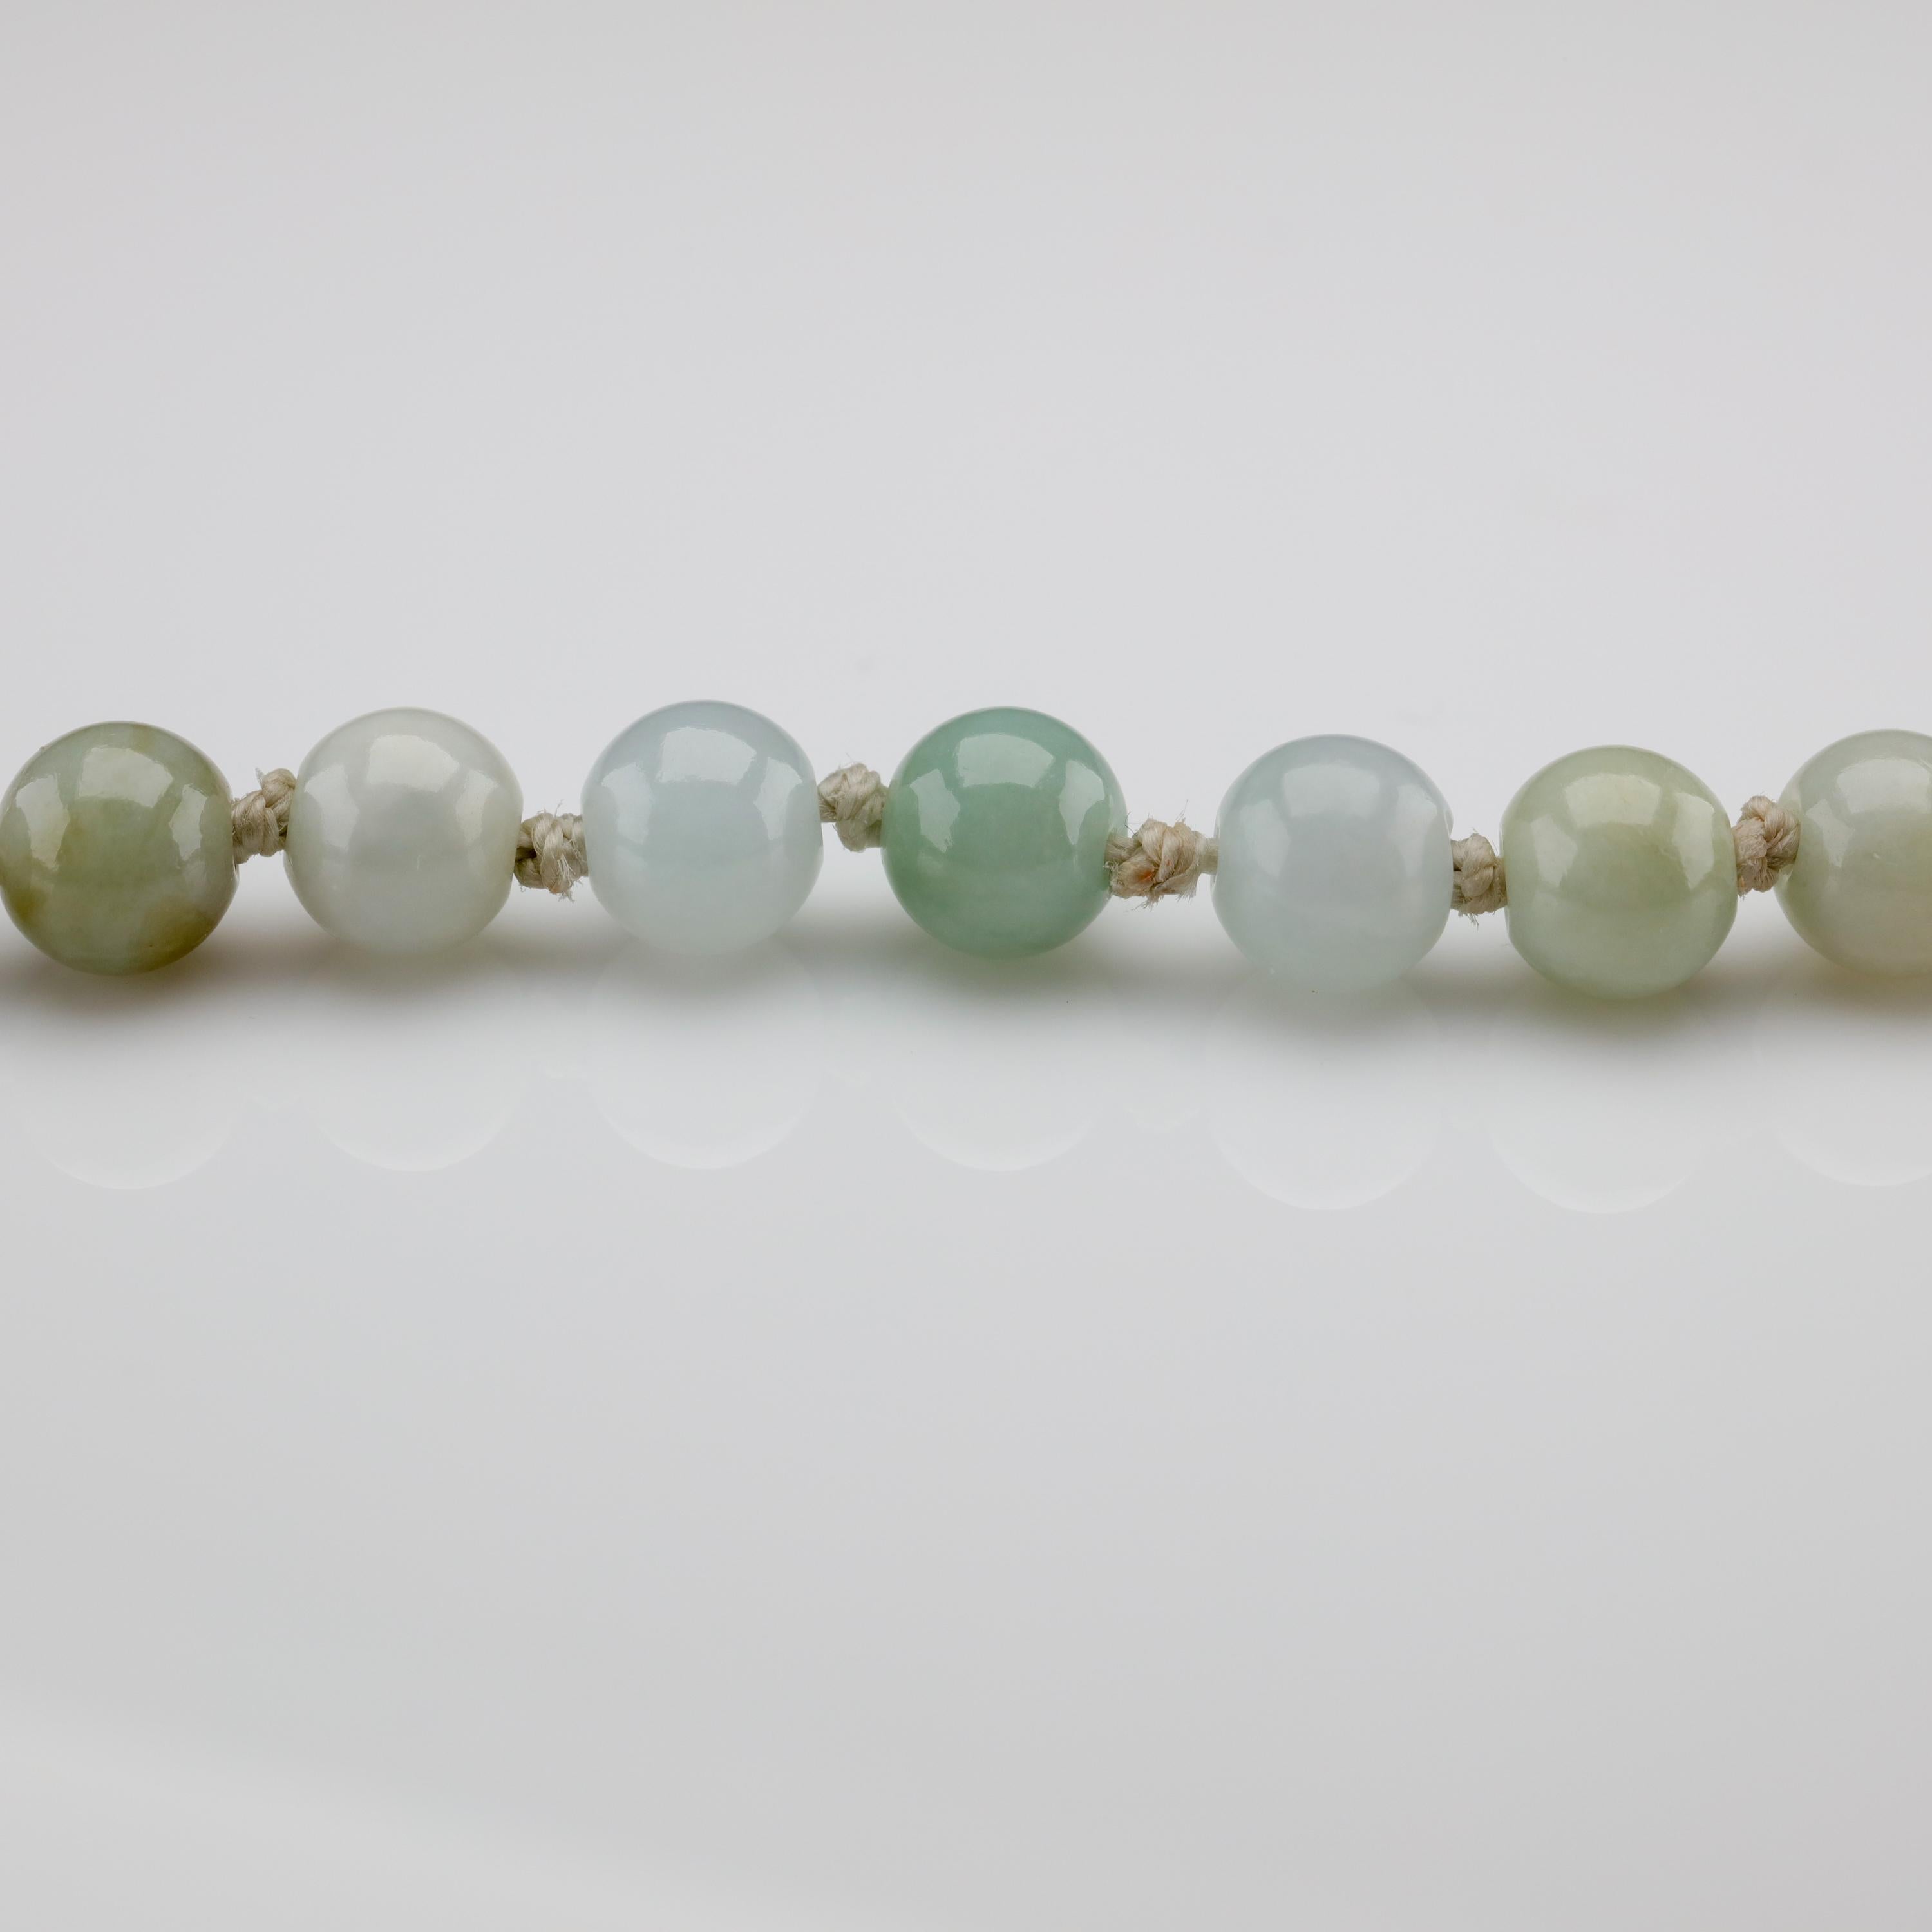 Antique Jade Necklace in Faint, Breathtaking Colors 8